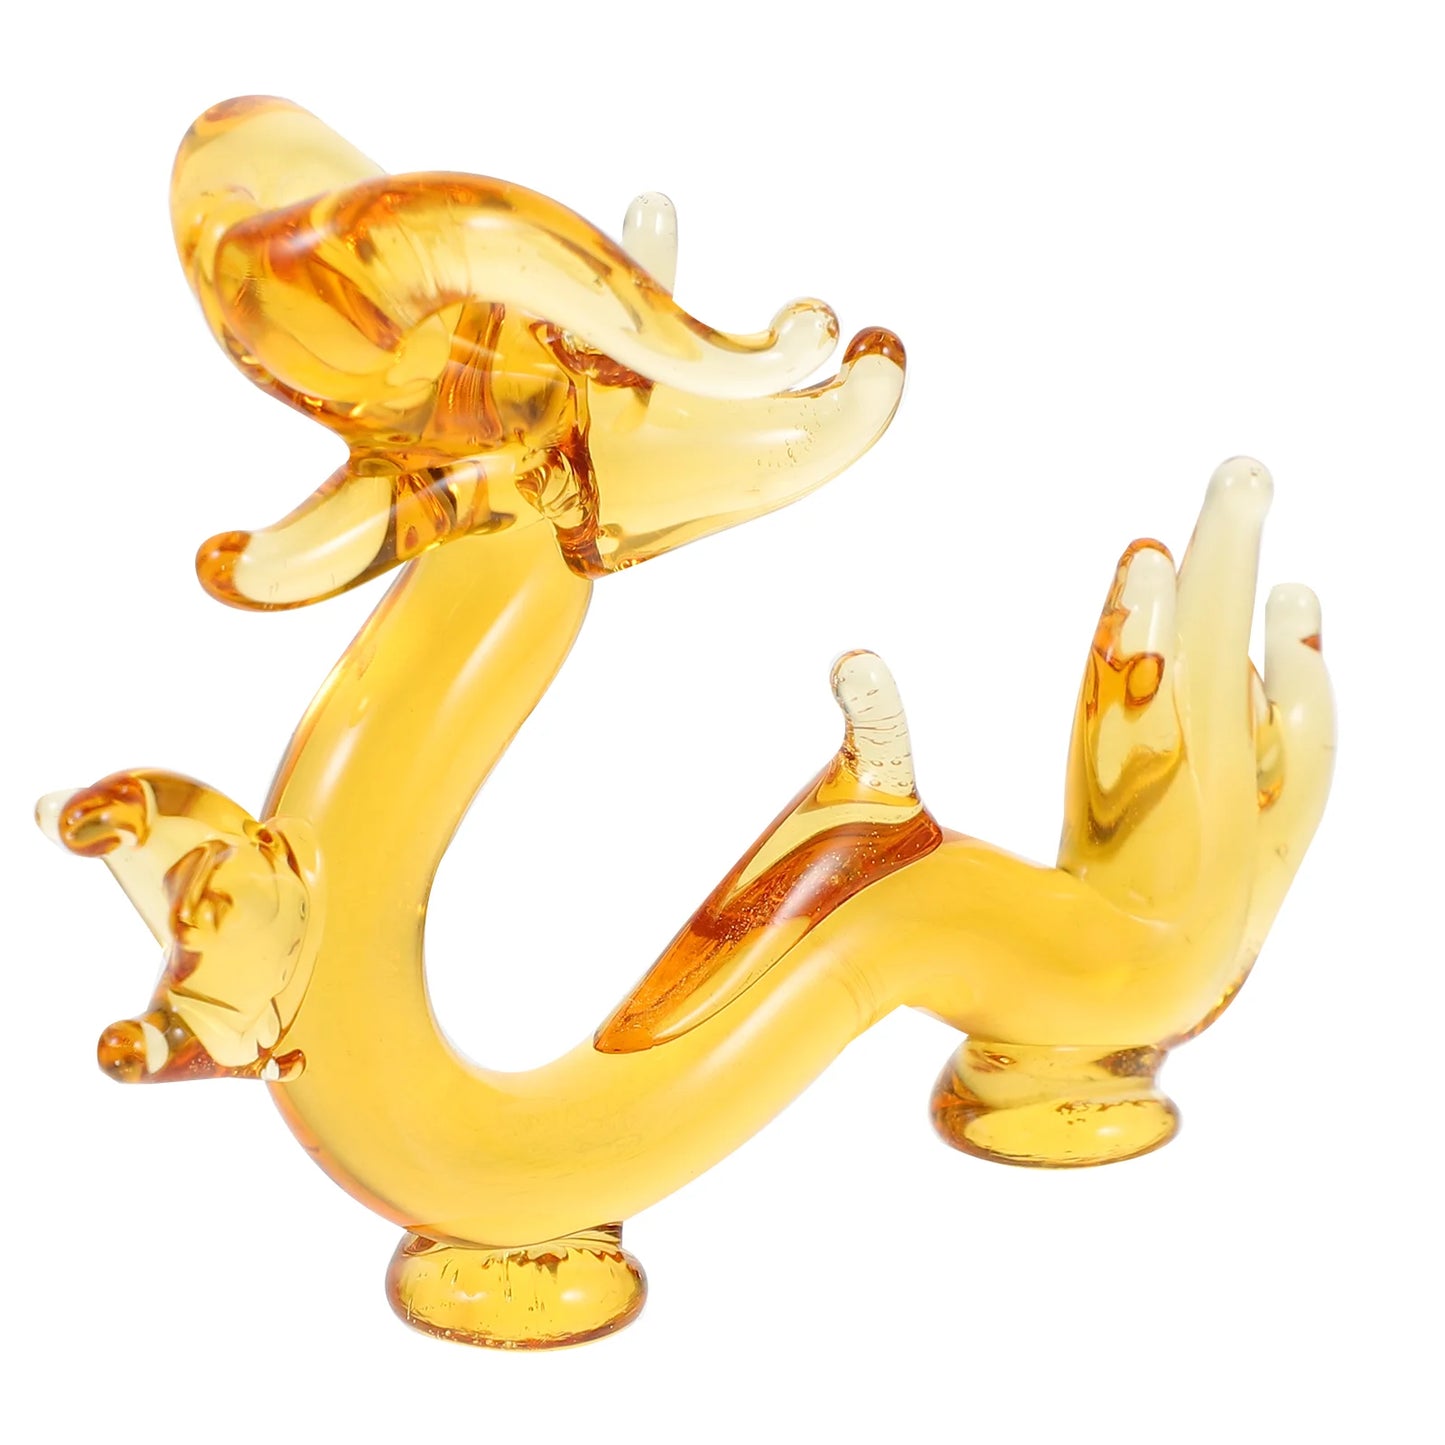 Crystal Dragon Statue Hand Blown Glass Dragon Figurines Chinese Dragon Decoration